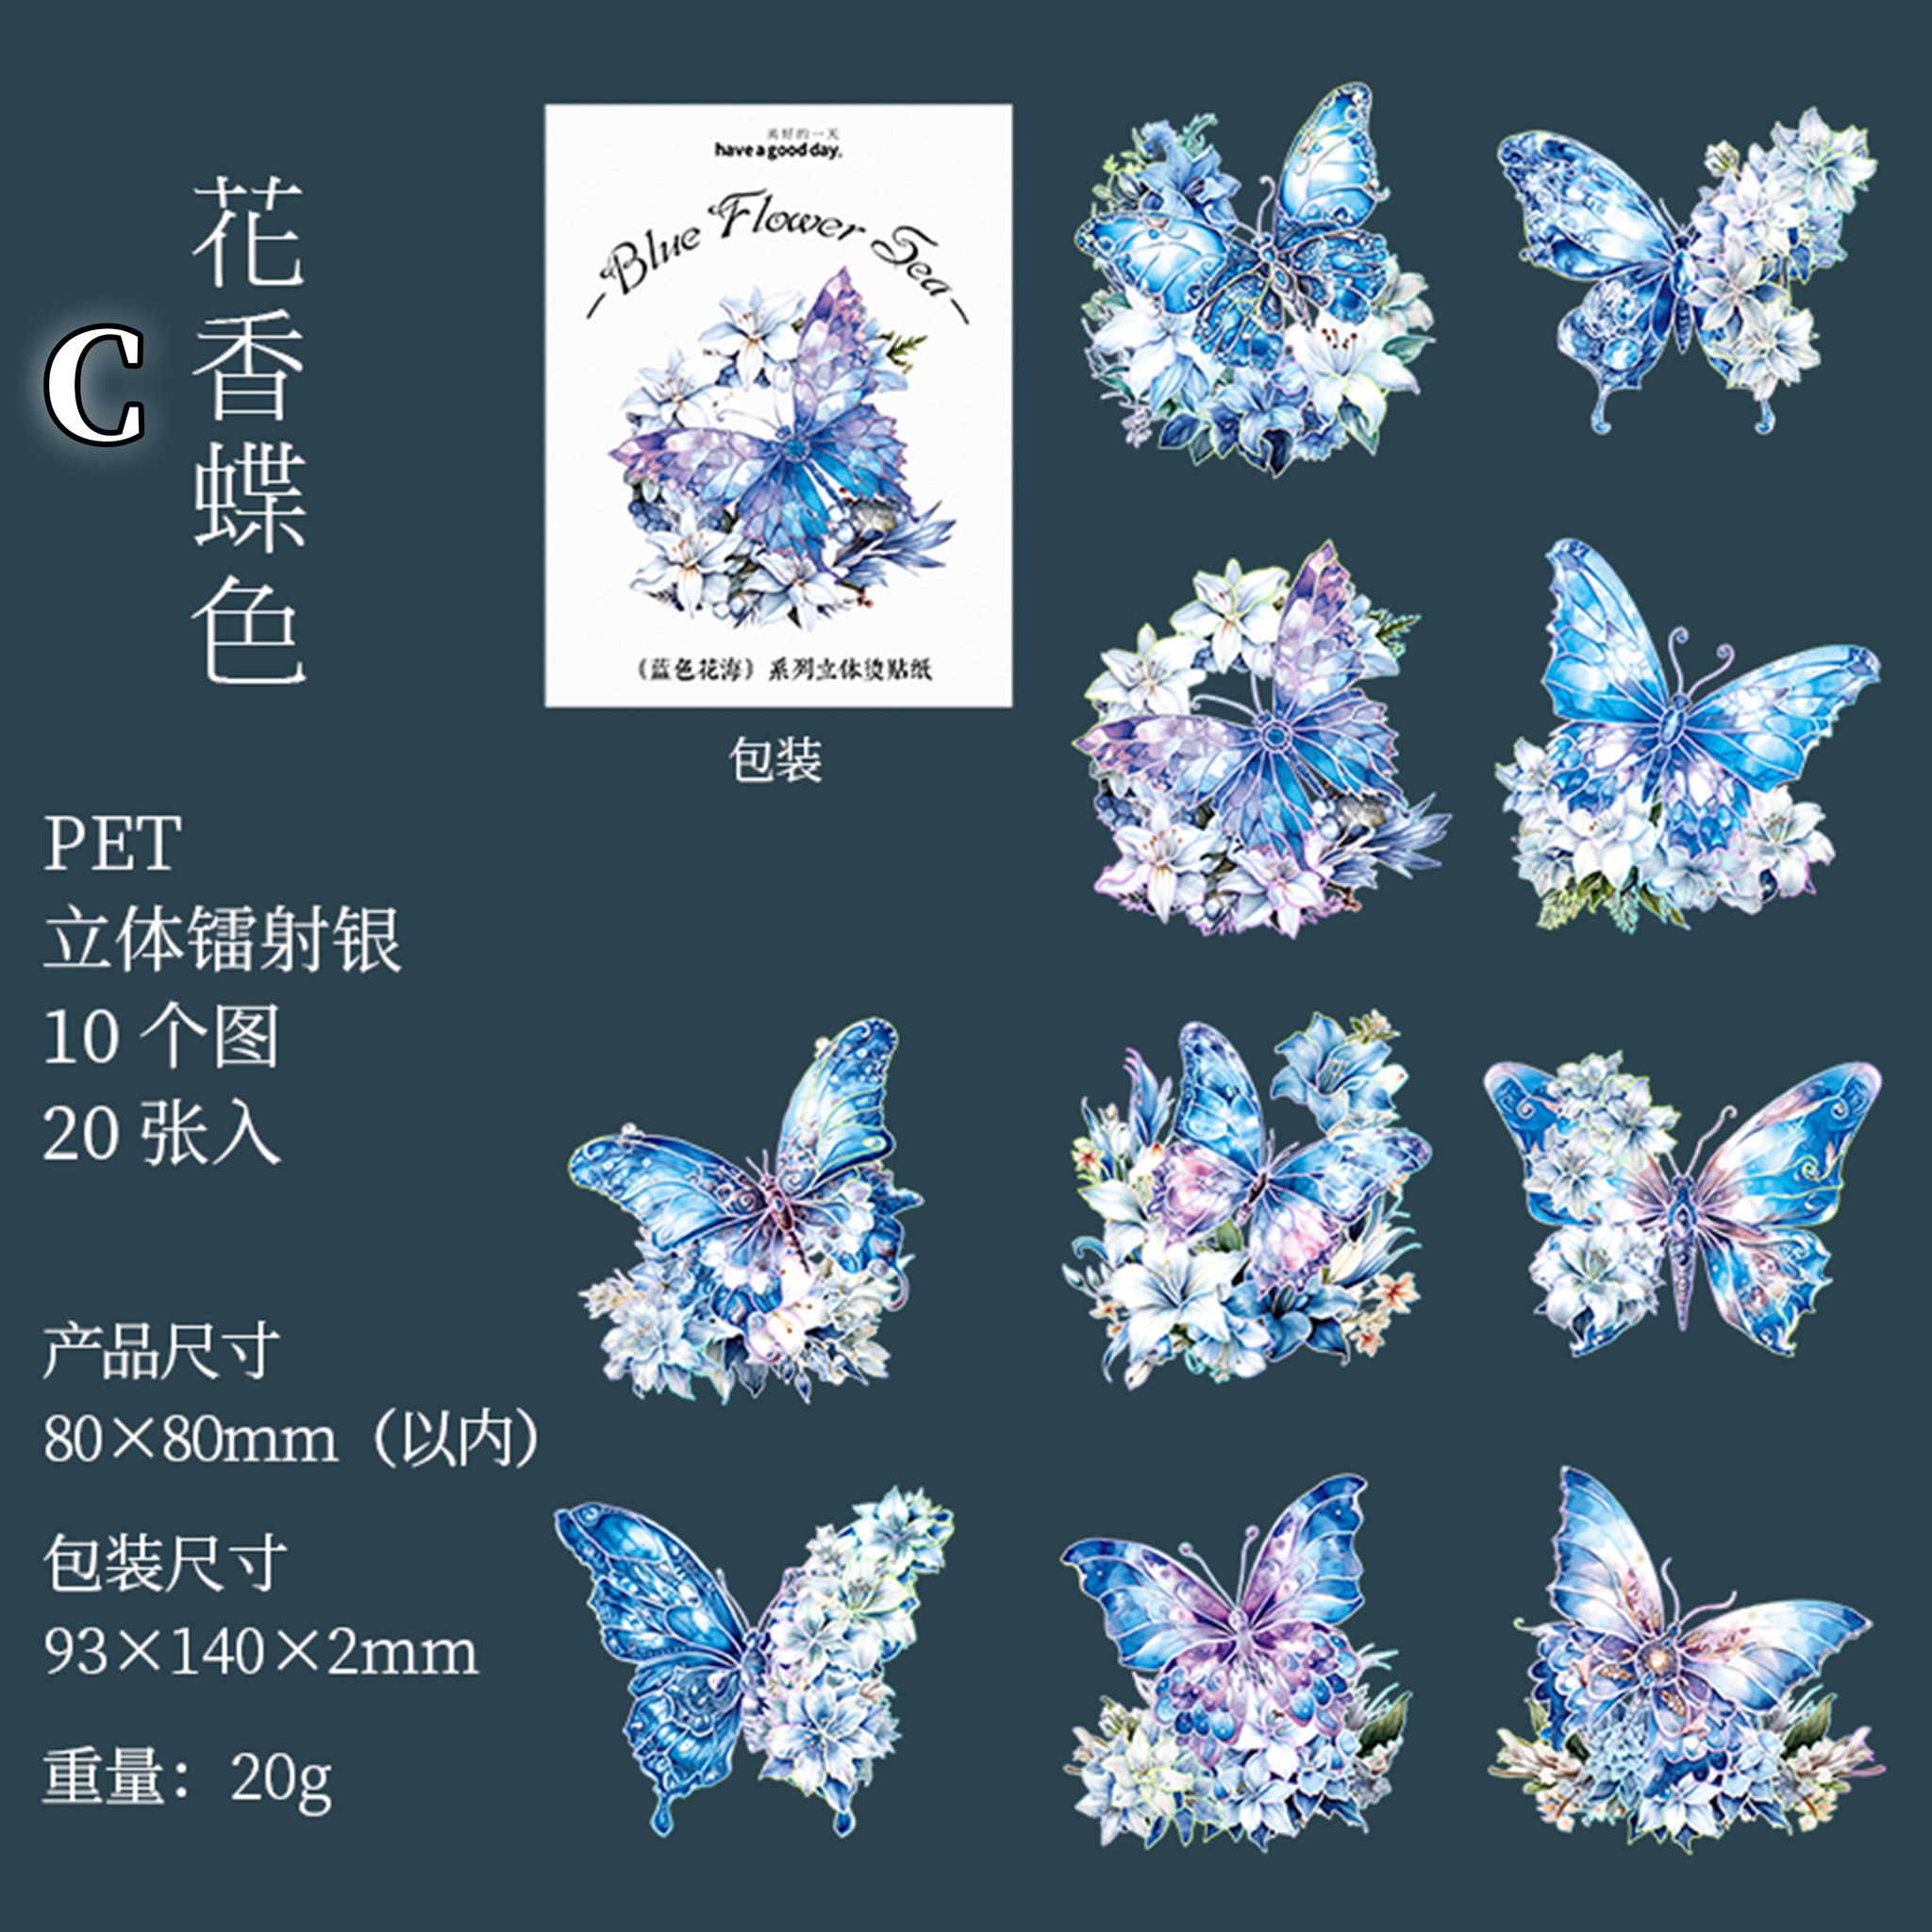 Sea of Blue Flowers Scrapbooking Journal PET Sticker